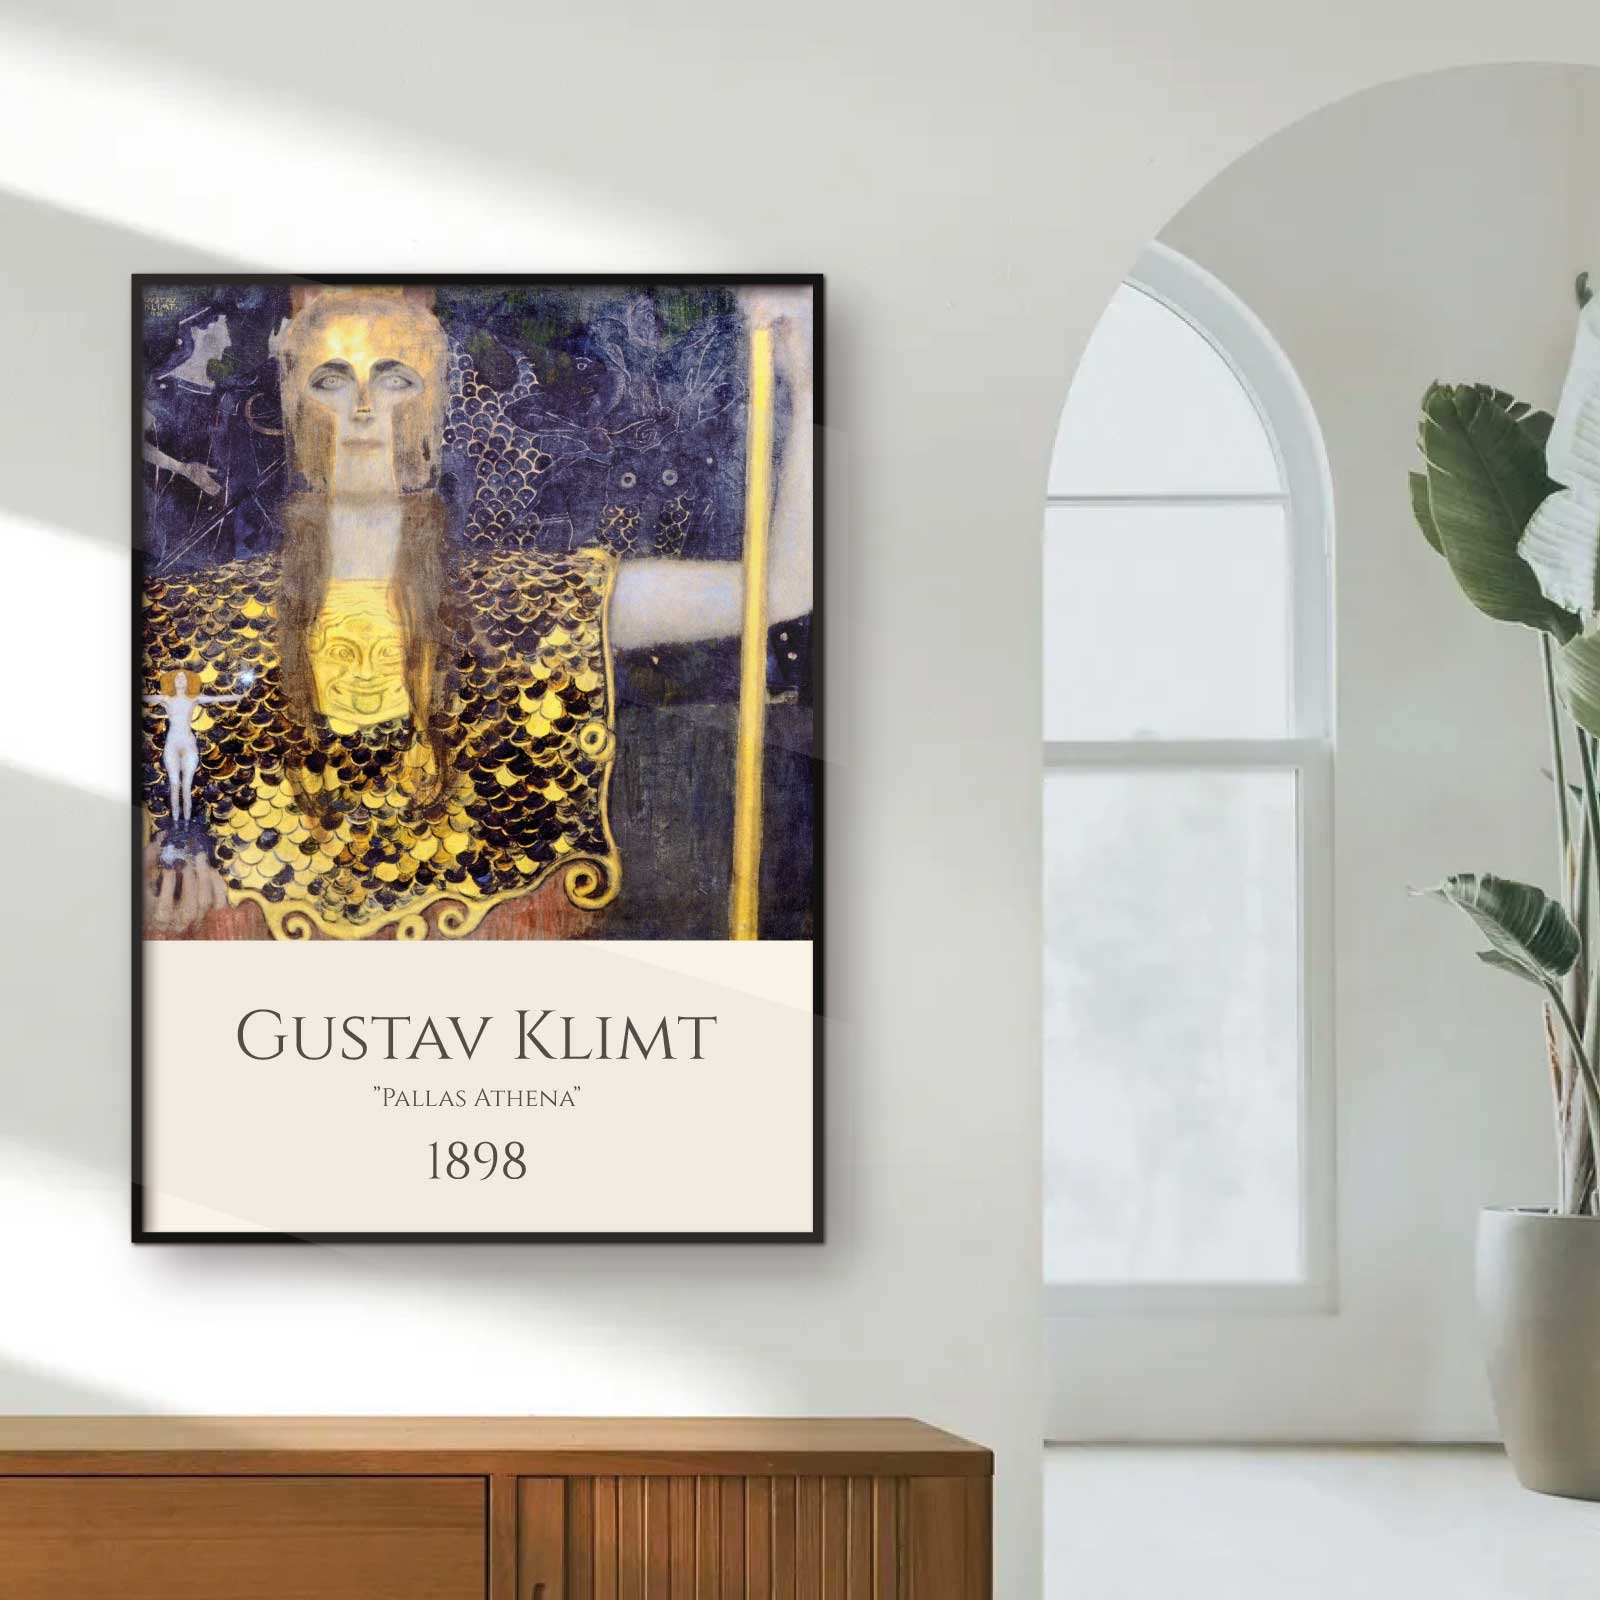 Art poster with Gustav Klimt painting "Pallas Athena"